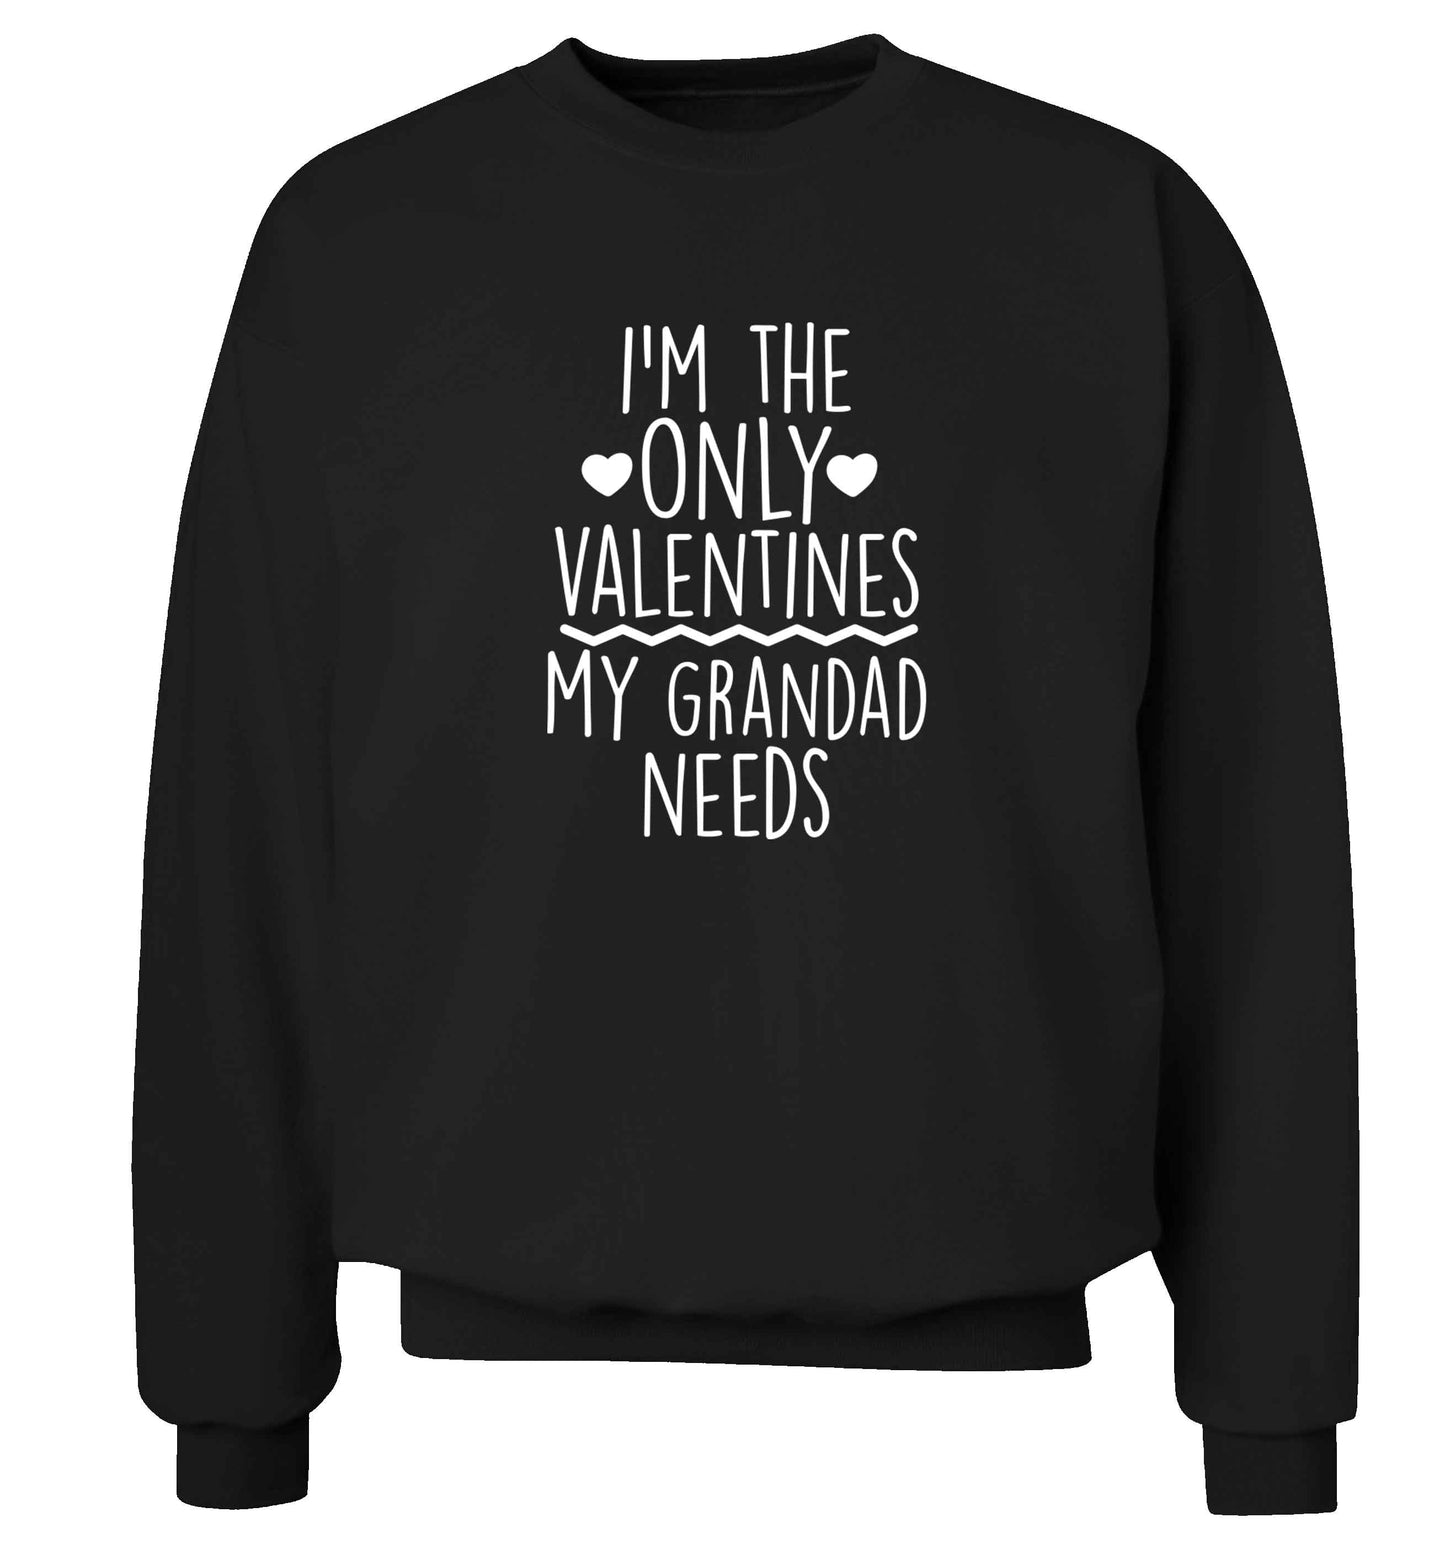 I'm the only valentines my grandad needs adult's unisex black sweater 2XL